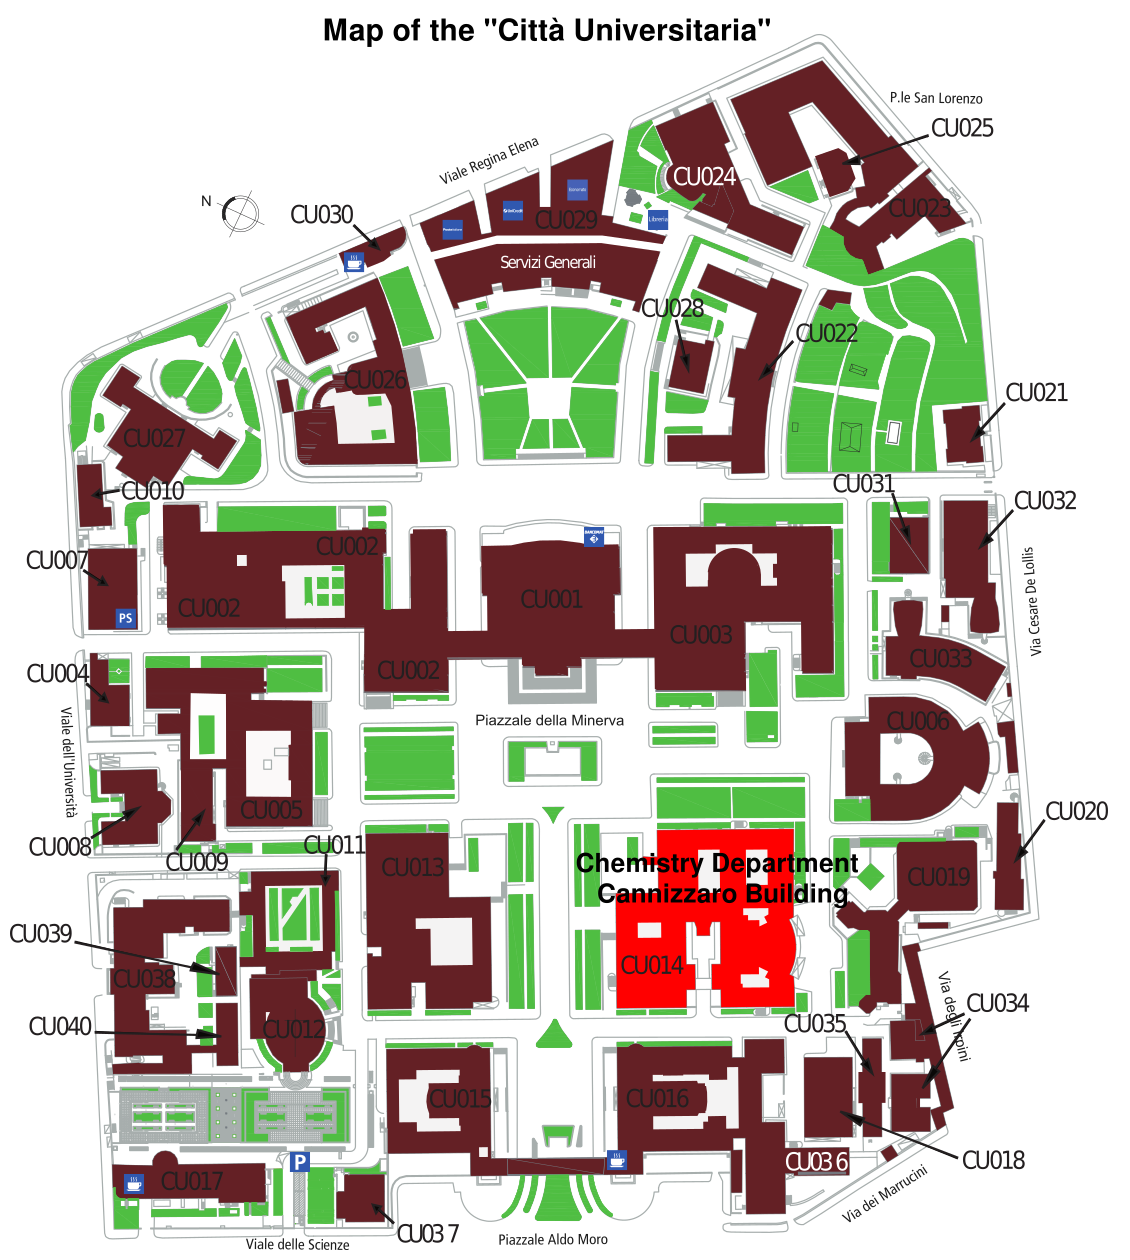 Map of the University city